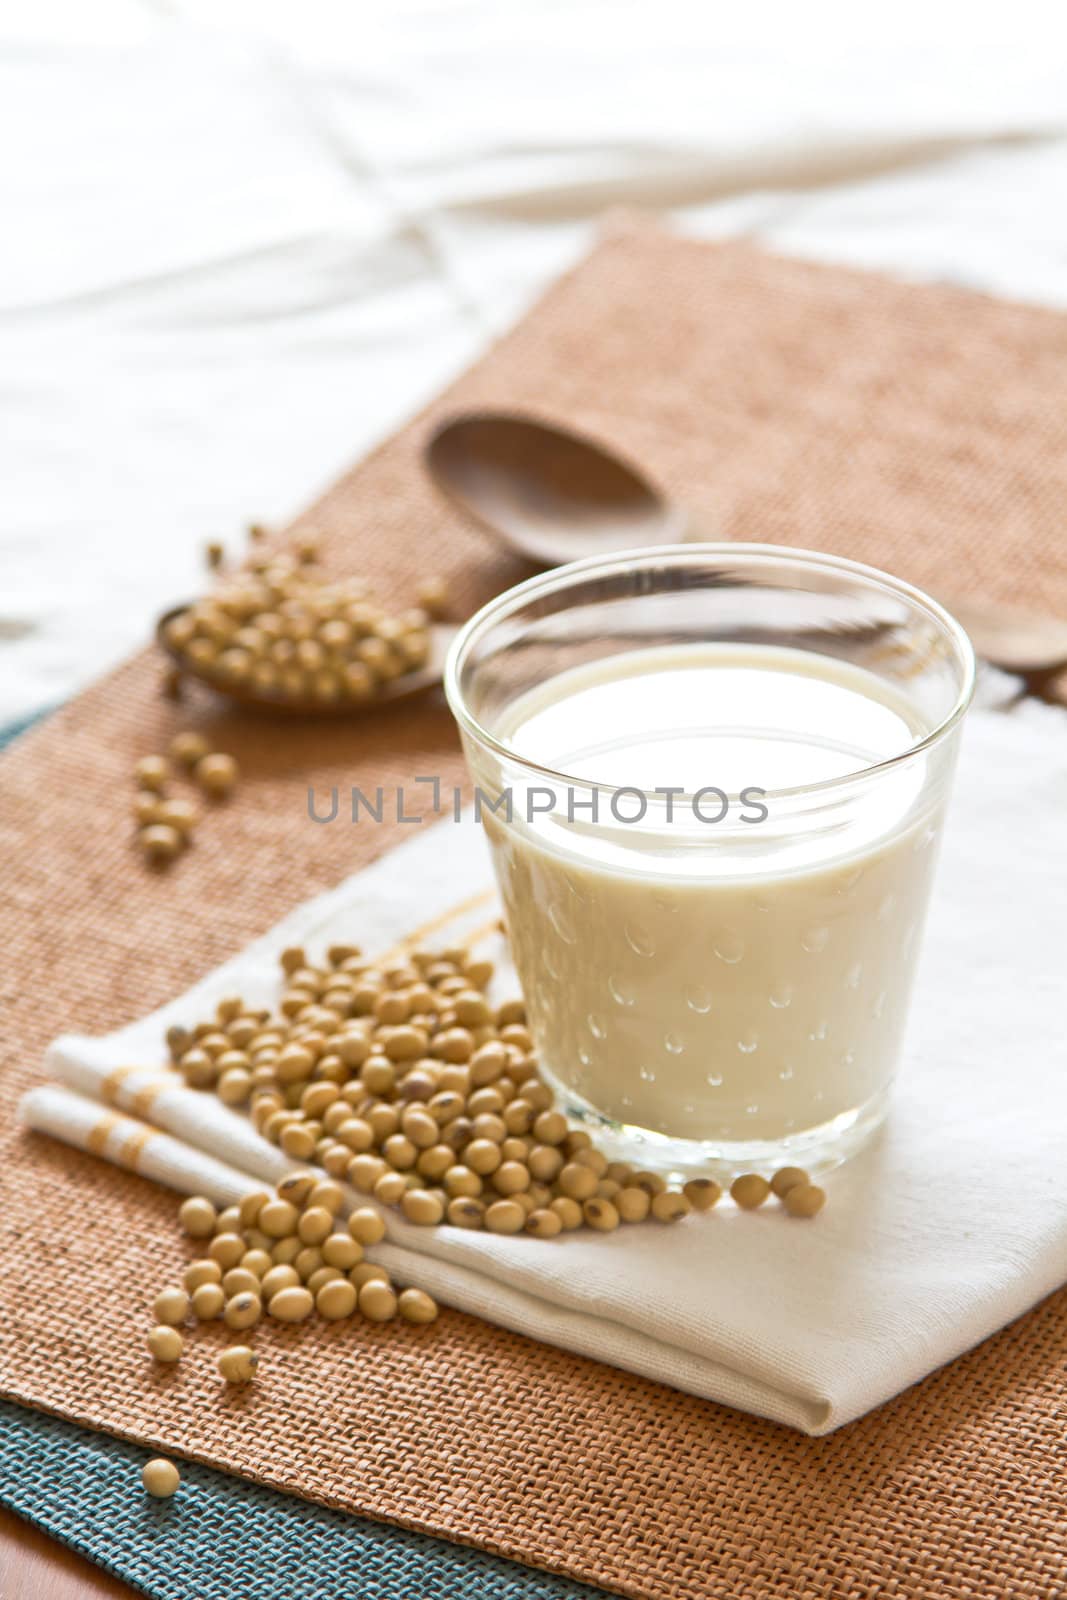 Soy milk [Soya milk] by vanillaechoes